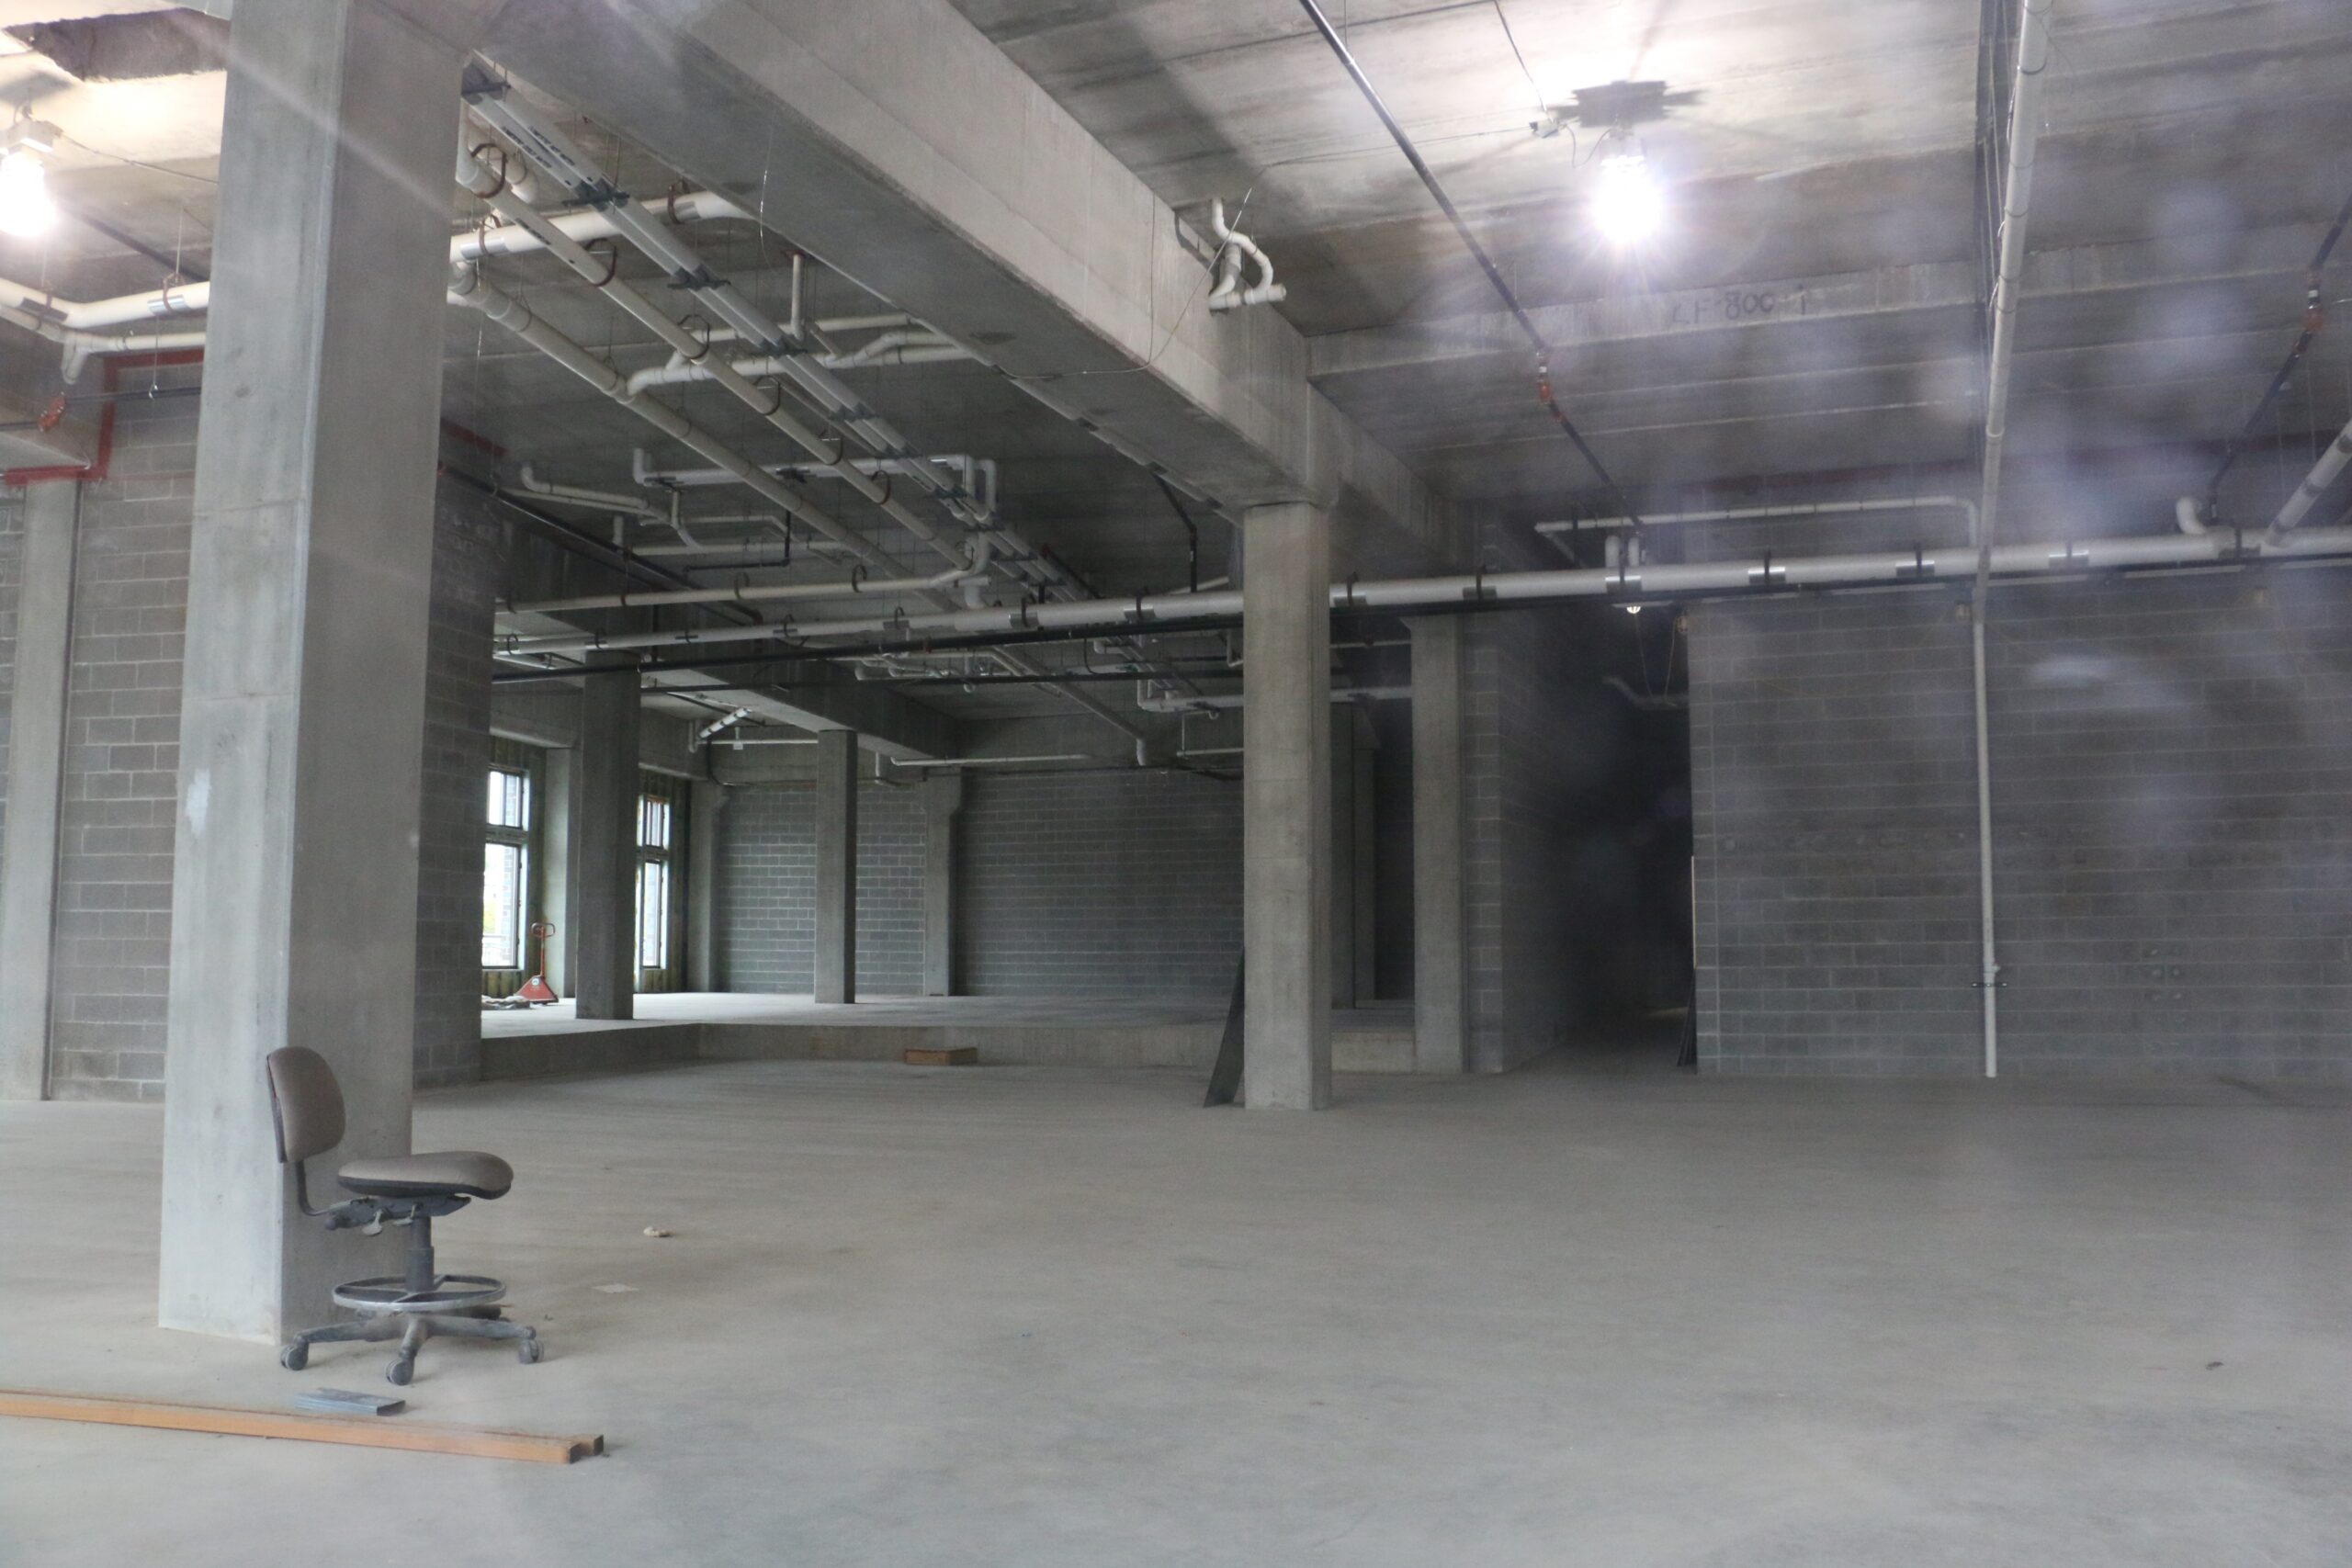 Empty Foxconn building interior